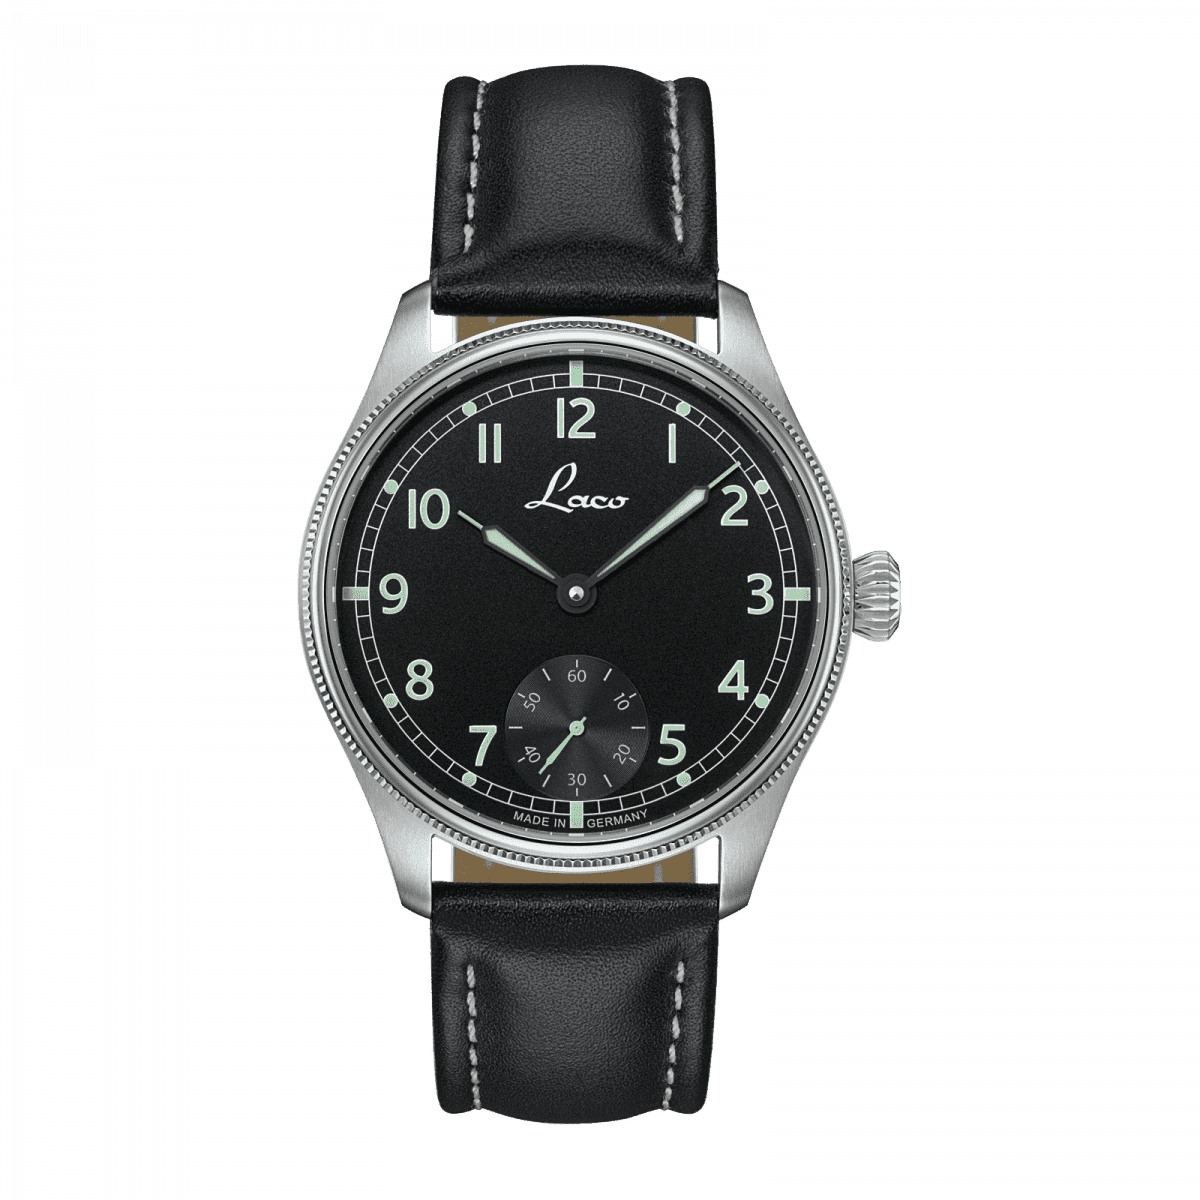 submarine watch made in